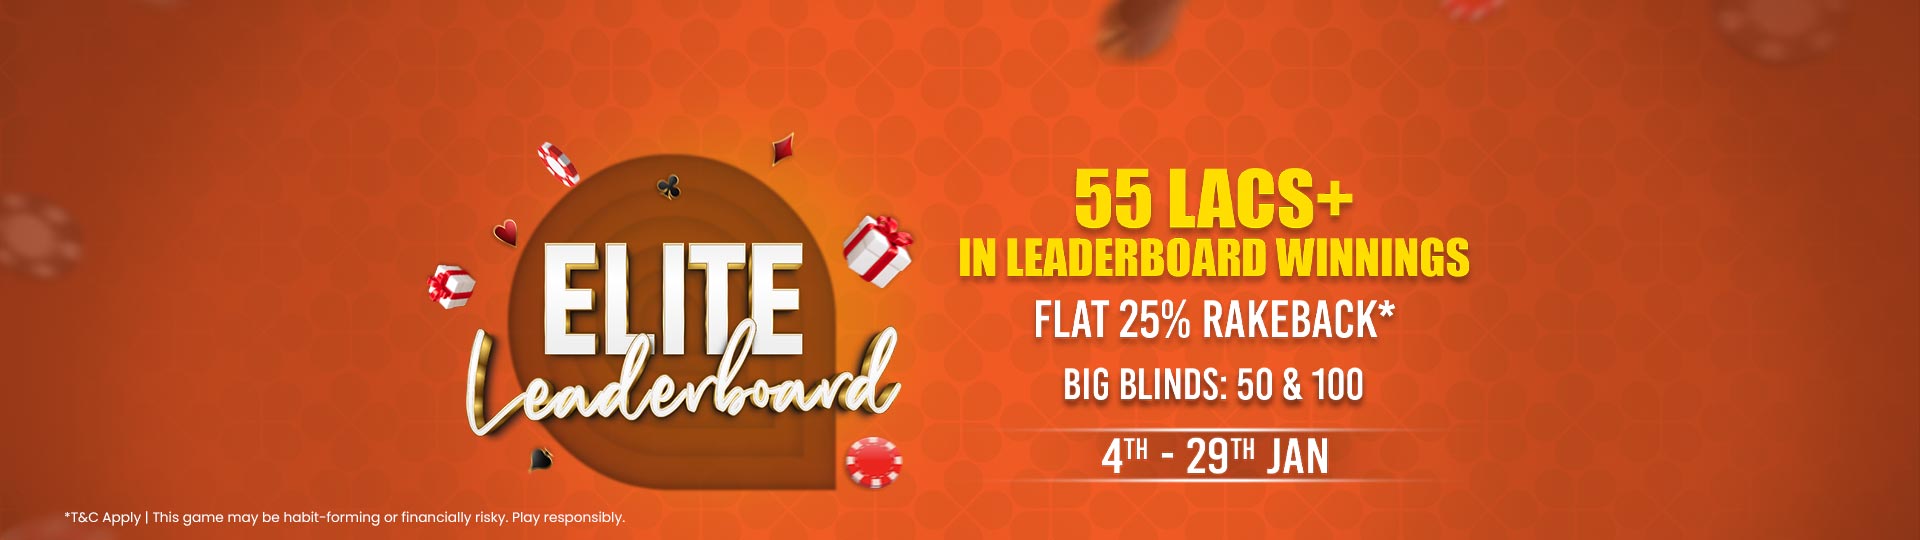 Adda52|Online|Poker|Elite Leaderboards |January